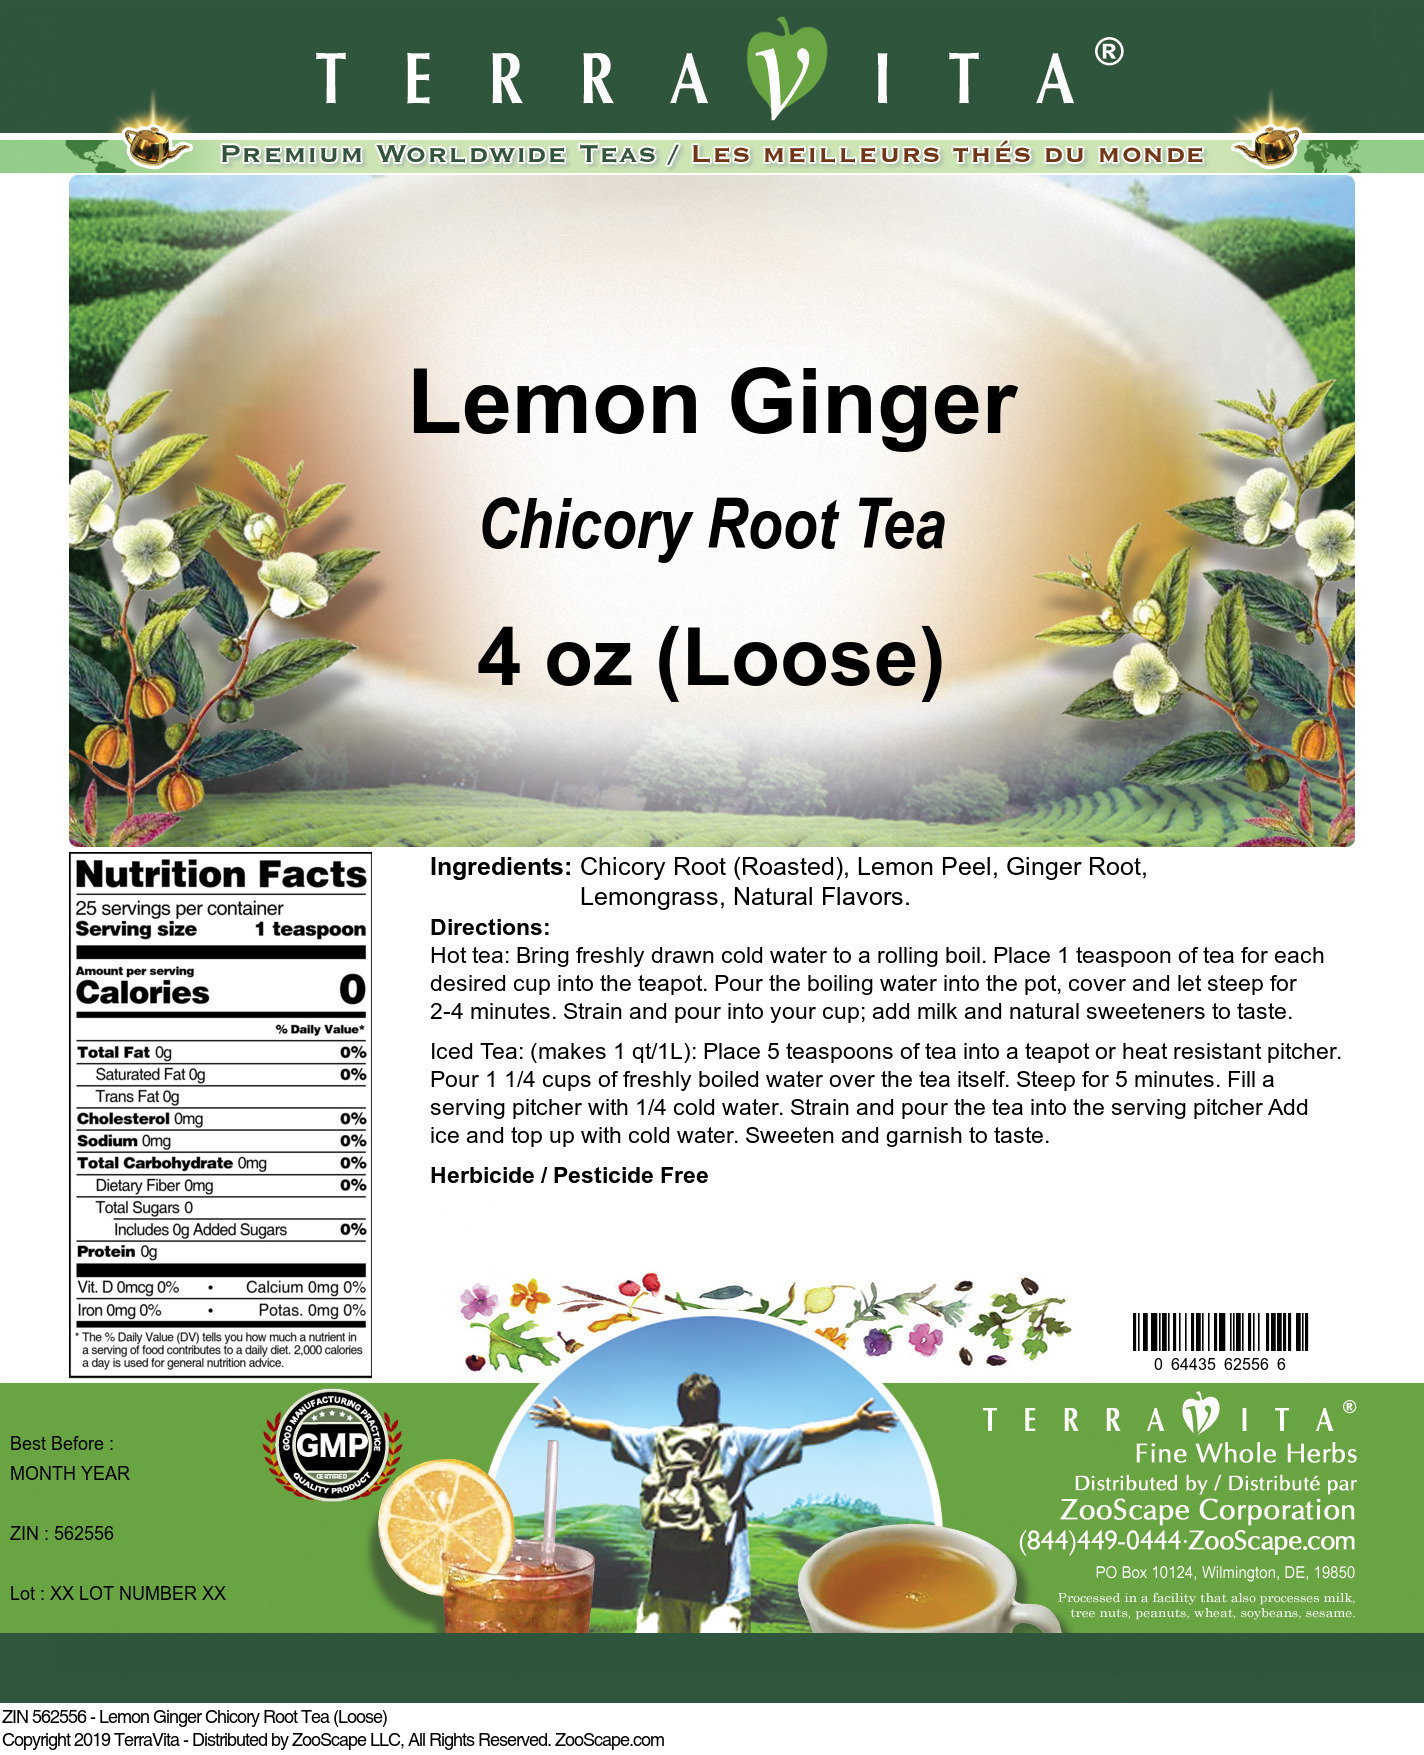 Lemon Ginger Chicory Root Tea (Loose) - Label